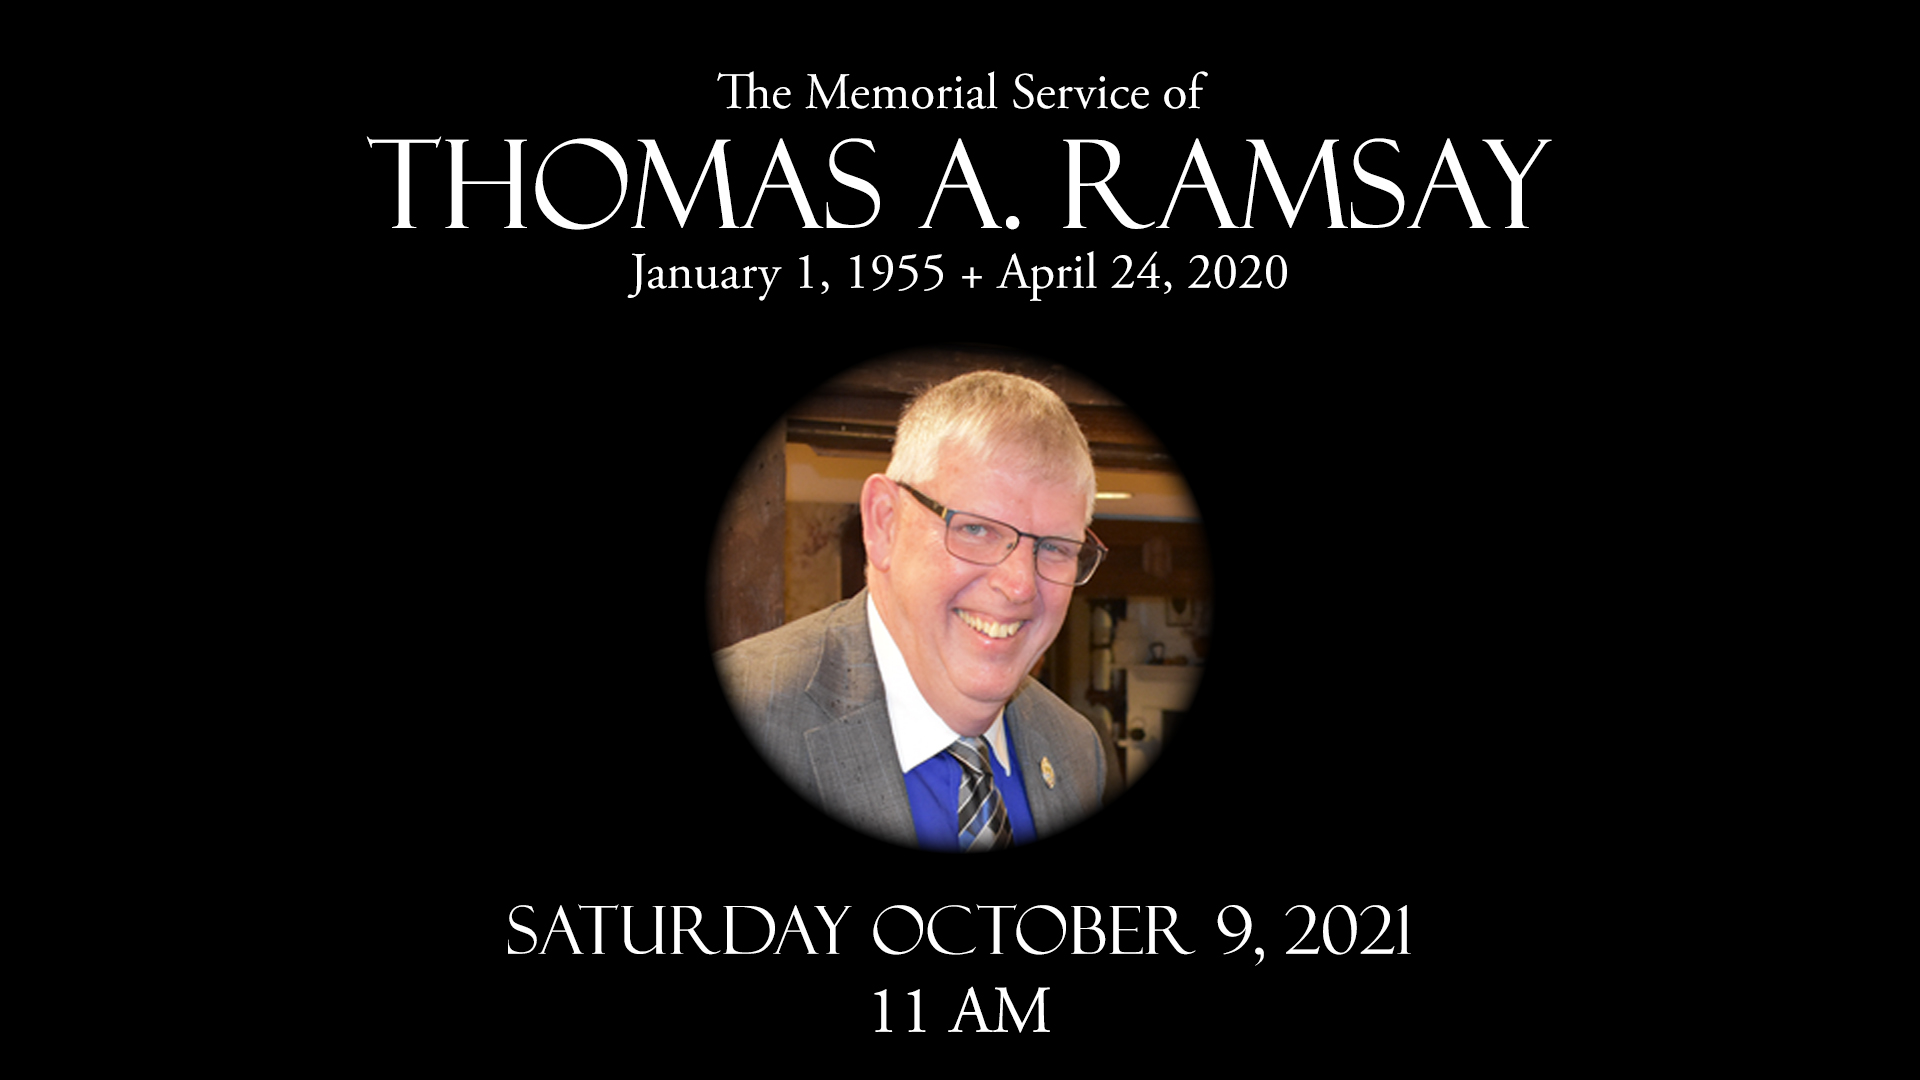 The Memorial Service of Thomas A. Ramsay